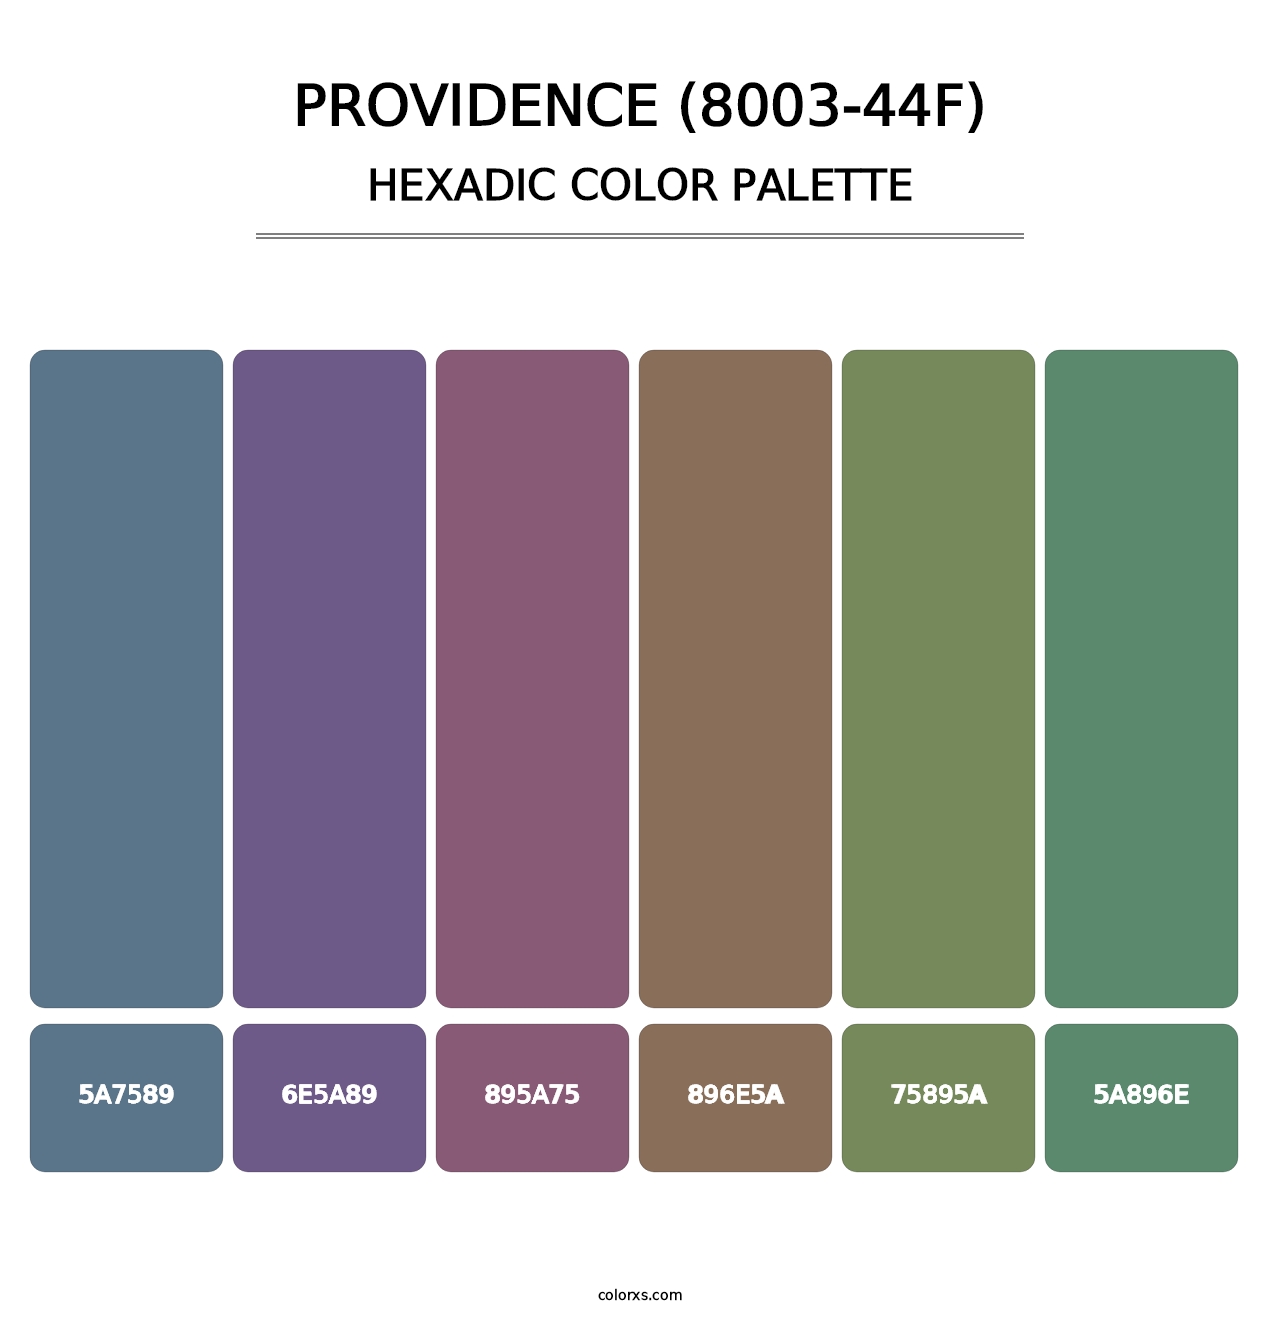 Providence (8003-44F) - Hexadic Color Palette